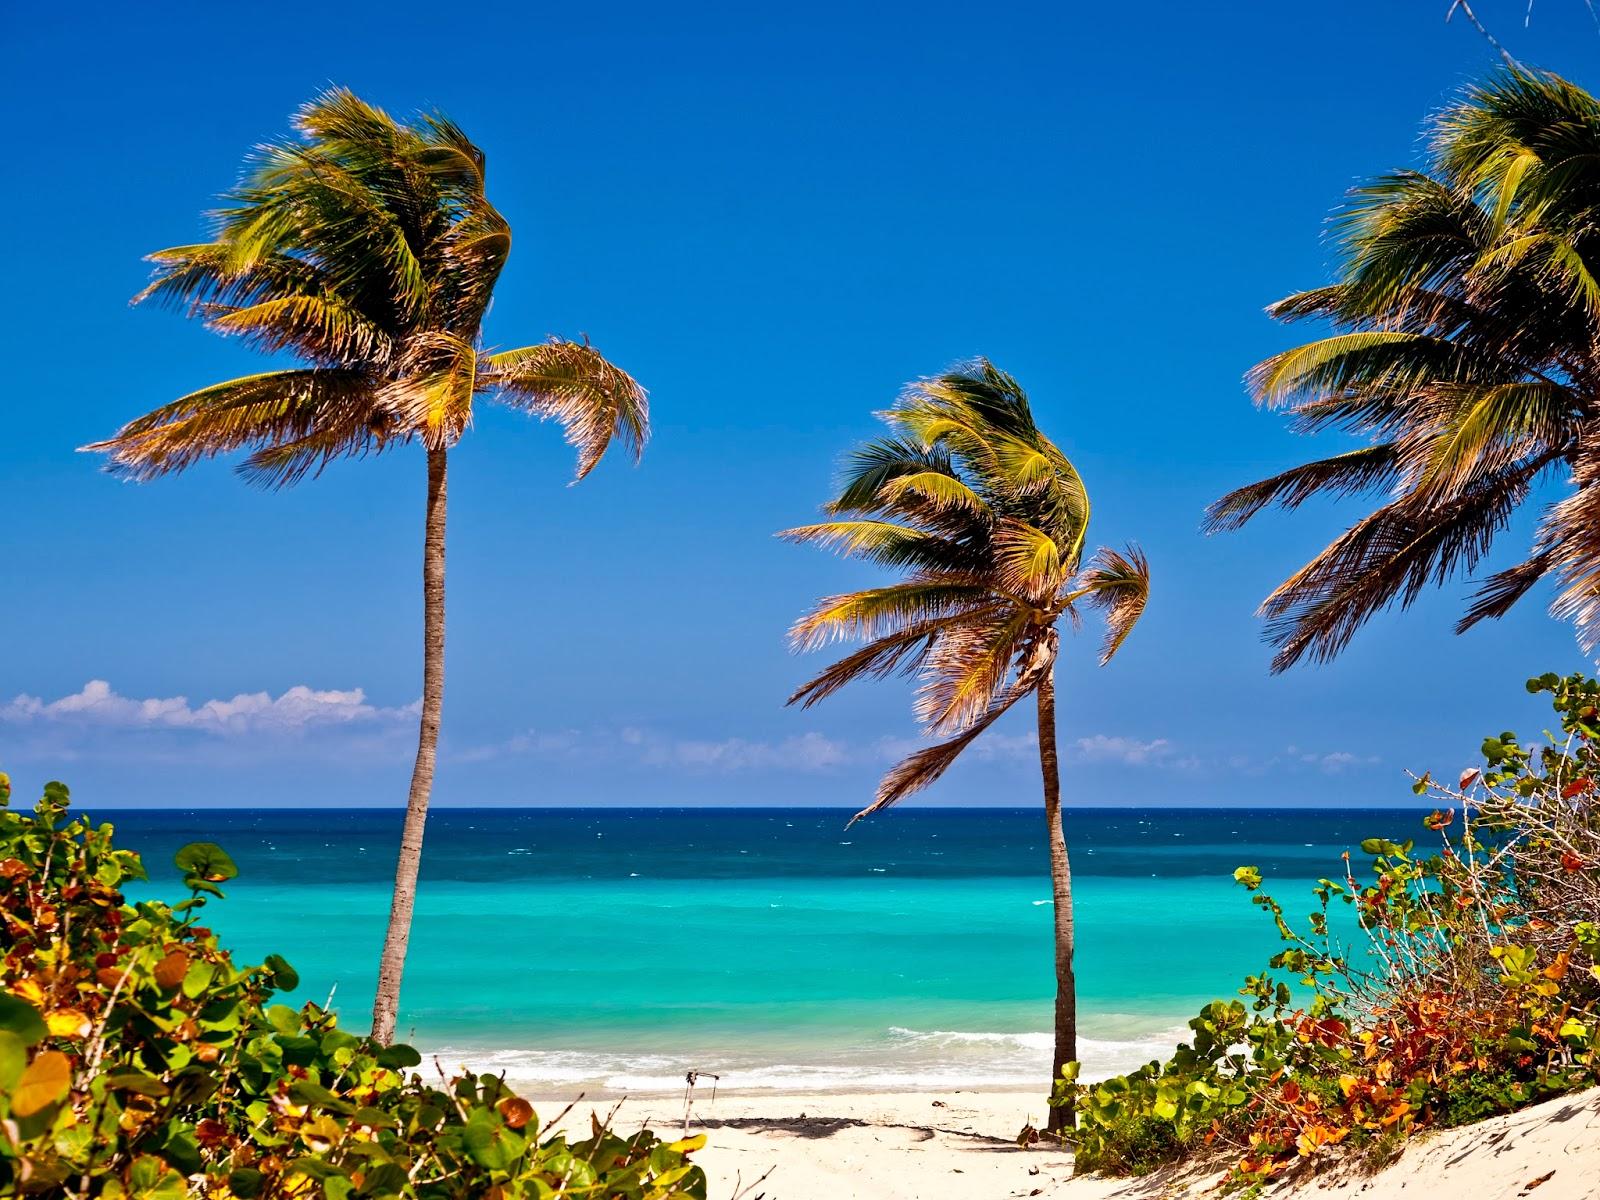 background image of Caribbean island cuba